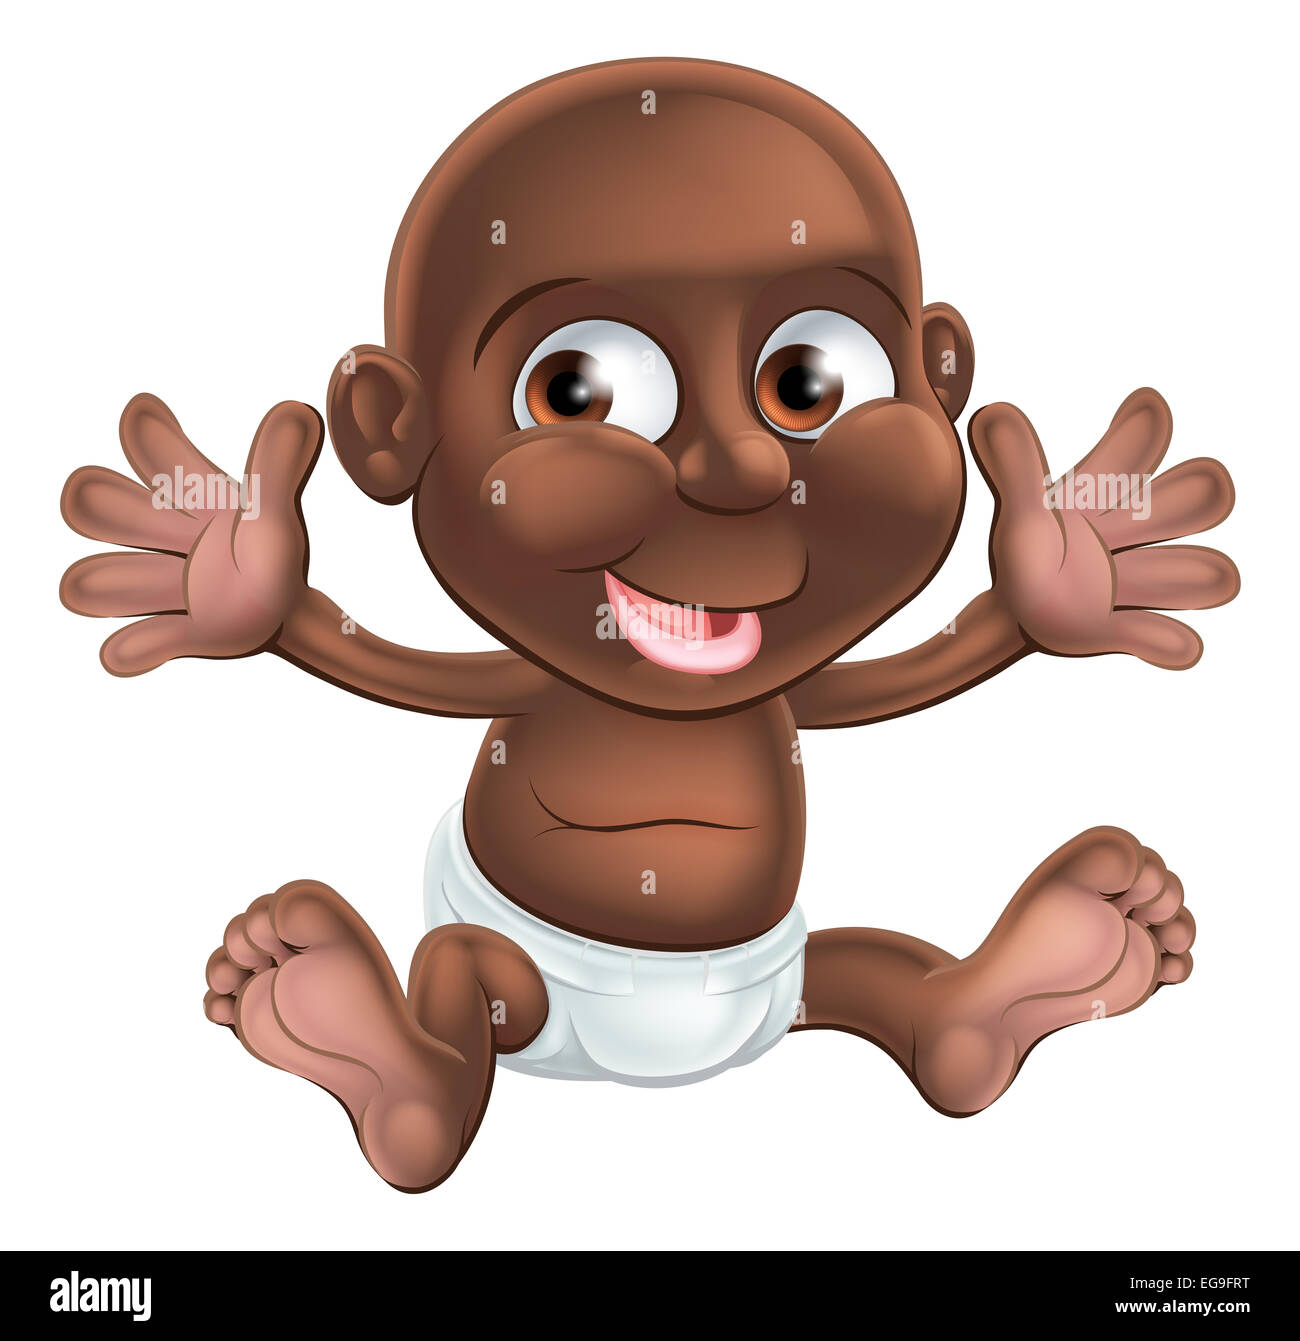 An illustration of a cute happy cartoon baby waving Stock Photo